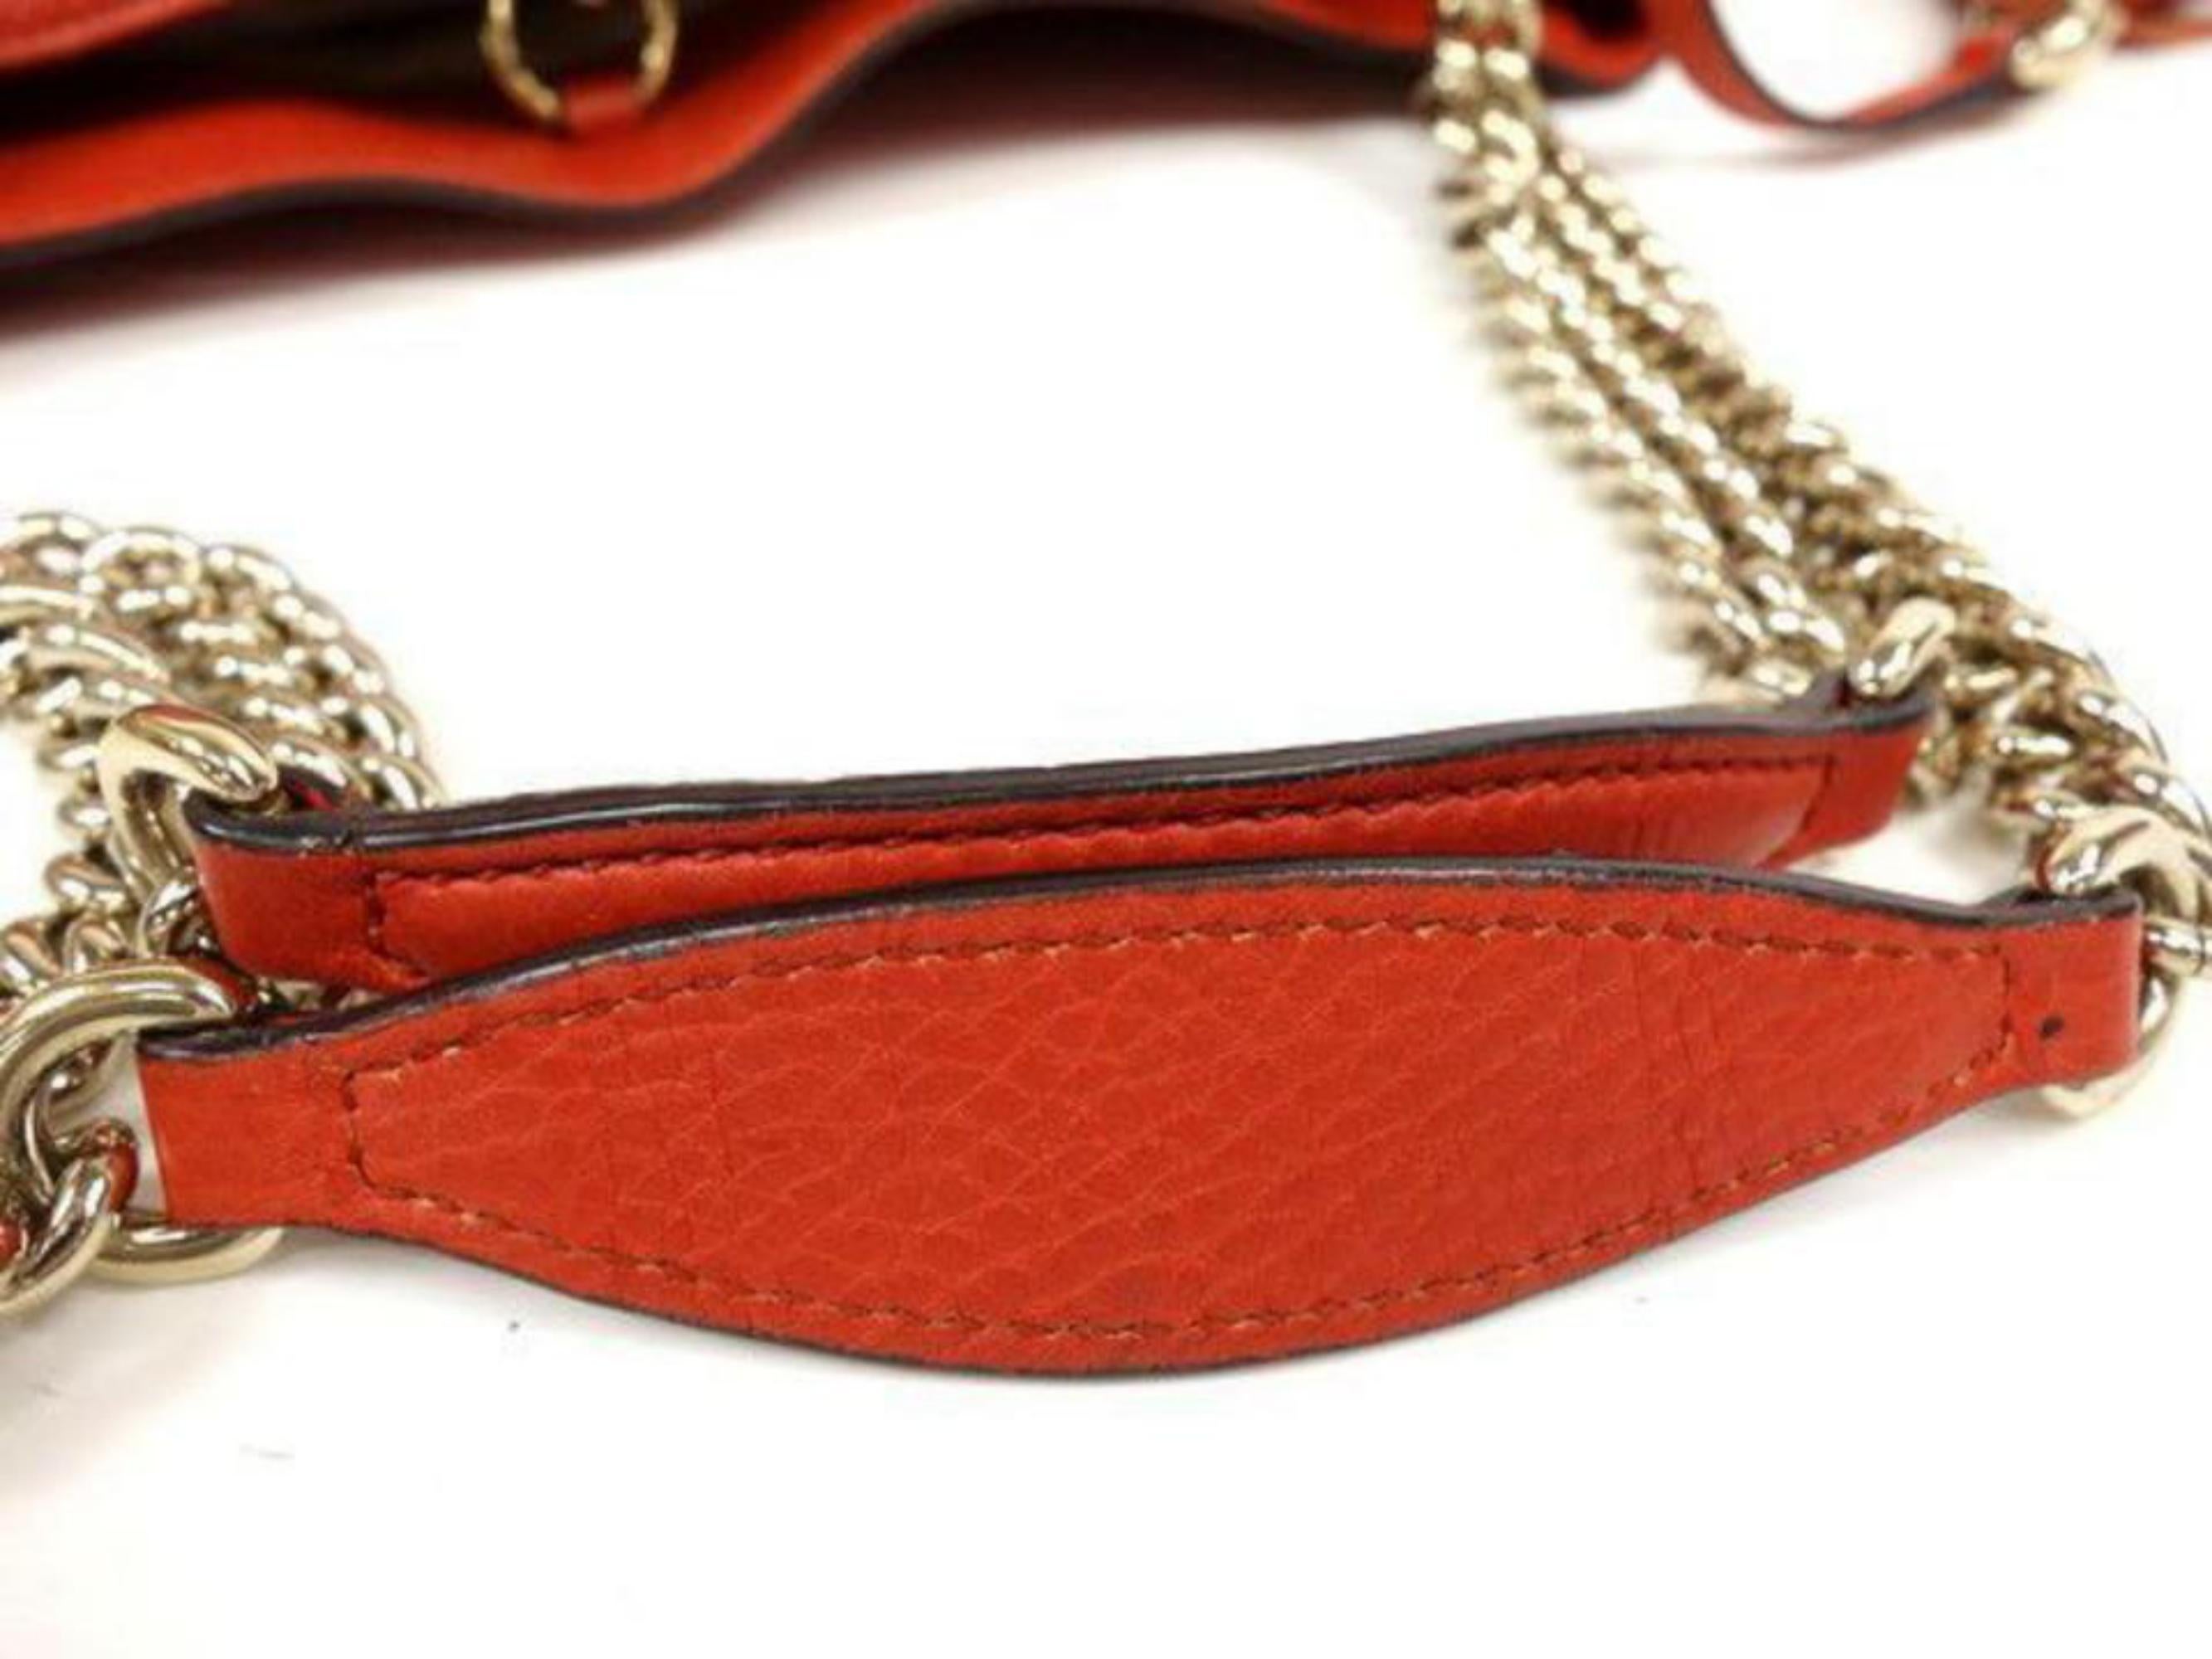 Gucci Soho Tabasco Fringe Tassel Chain Tote 230457 Red Leather Shoulder Bag For Sale 1